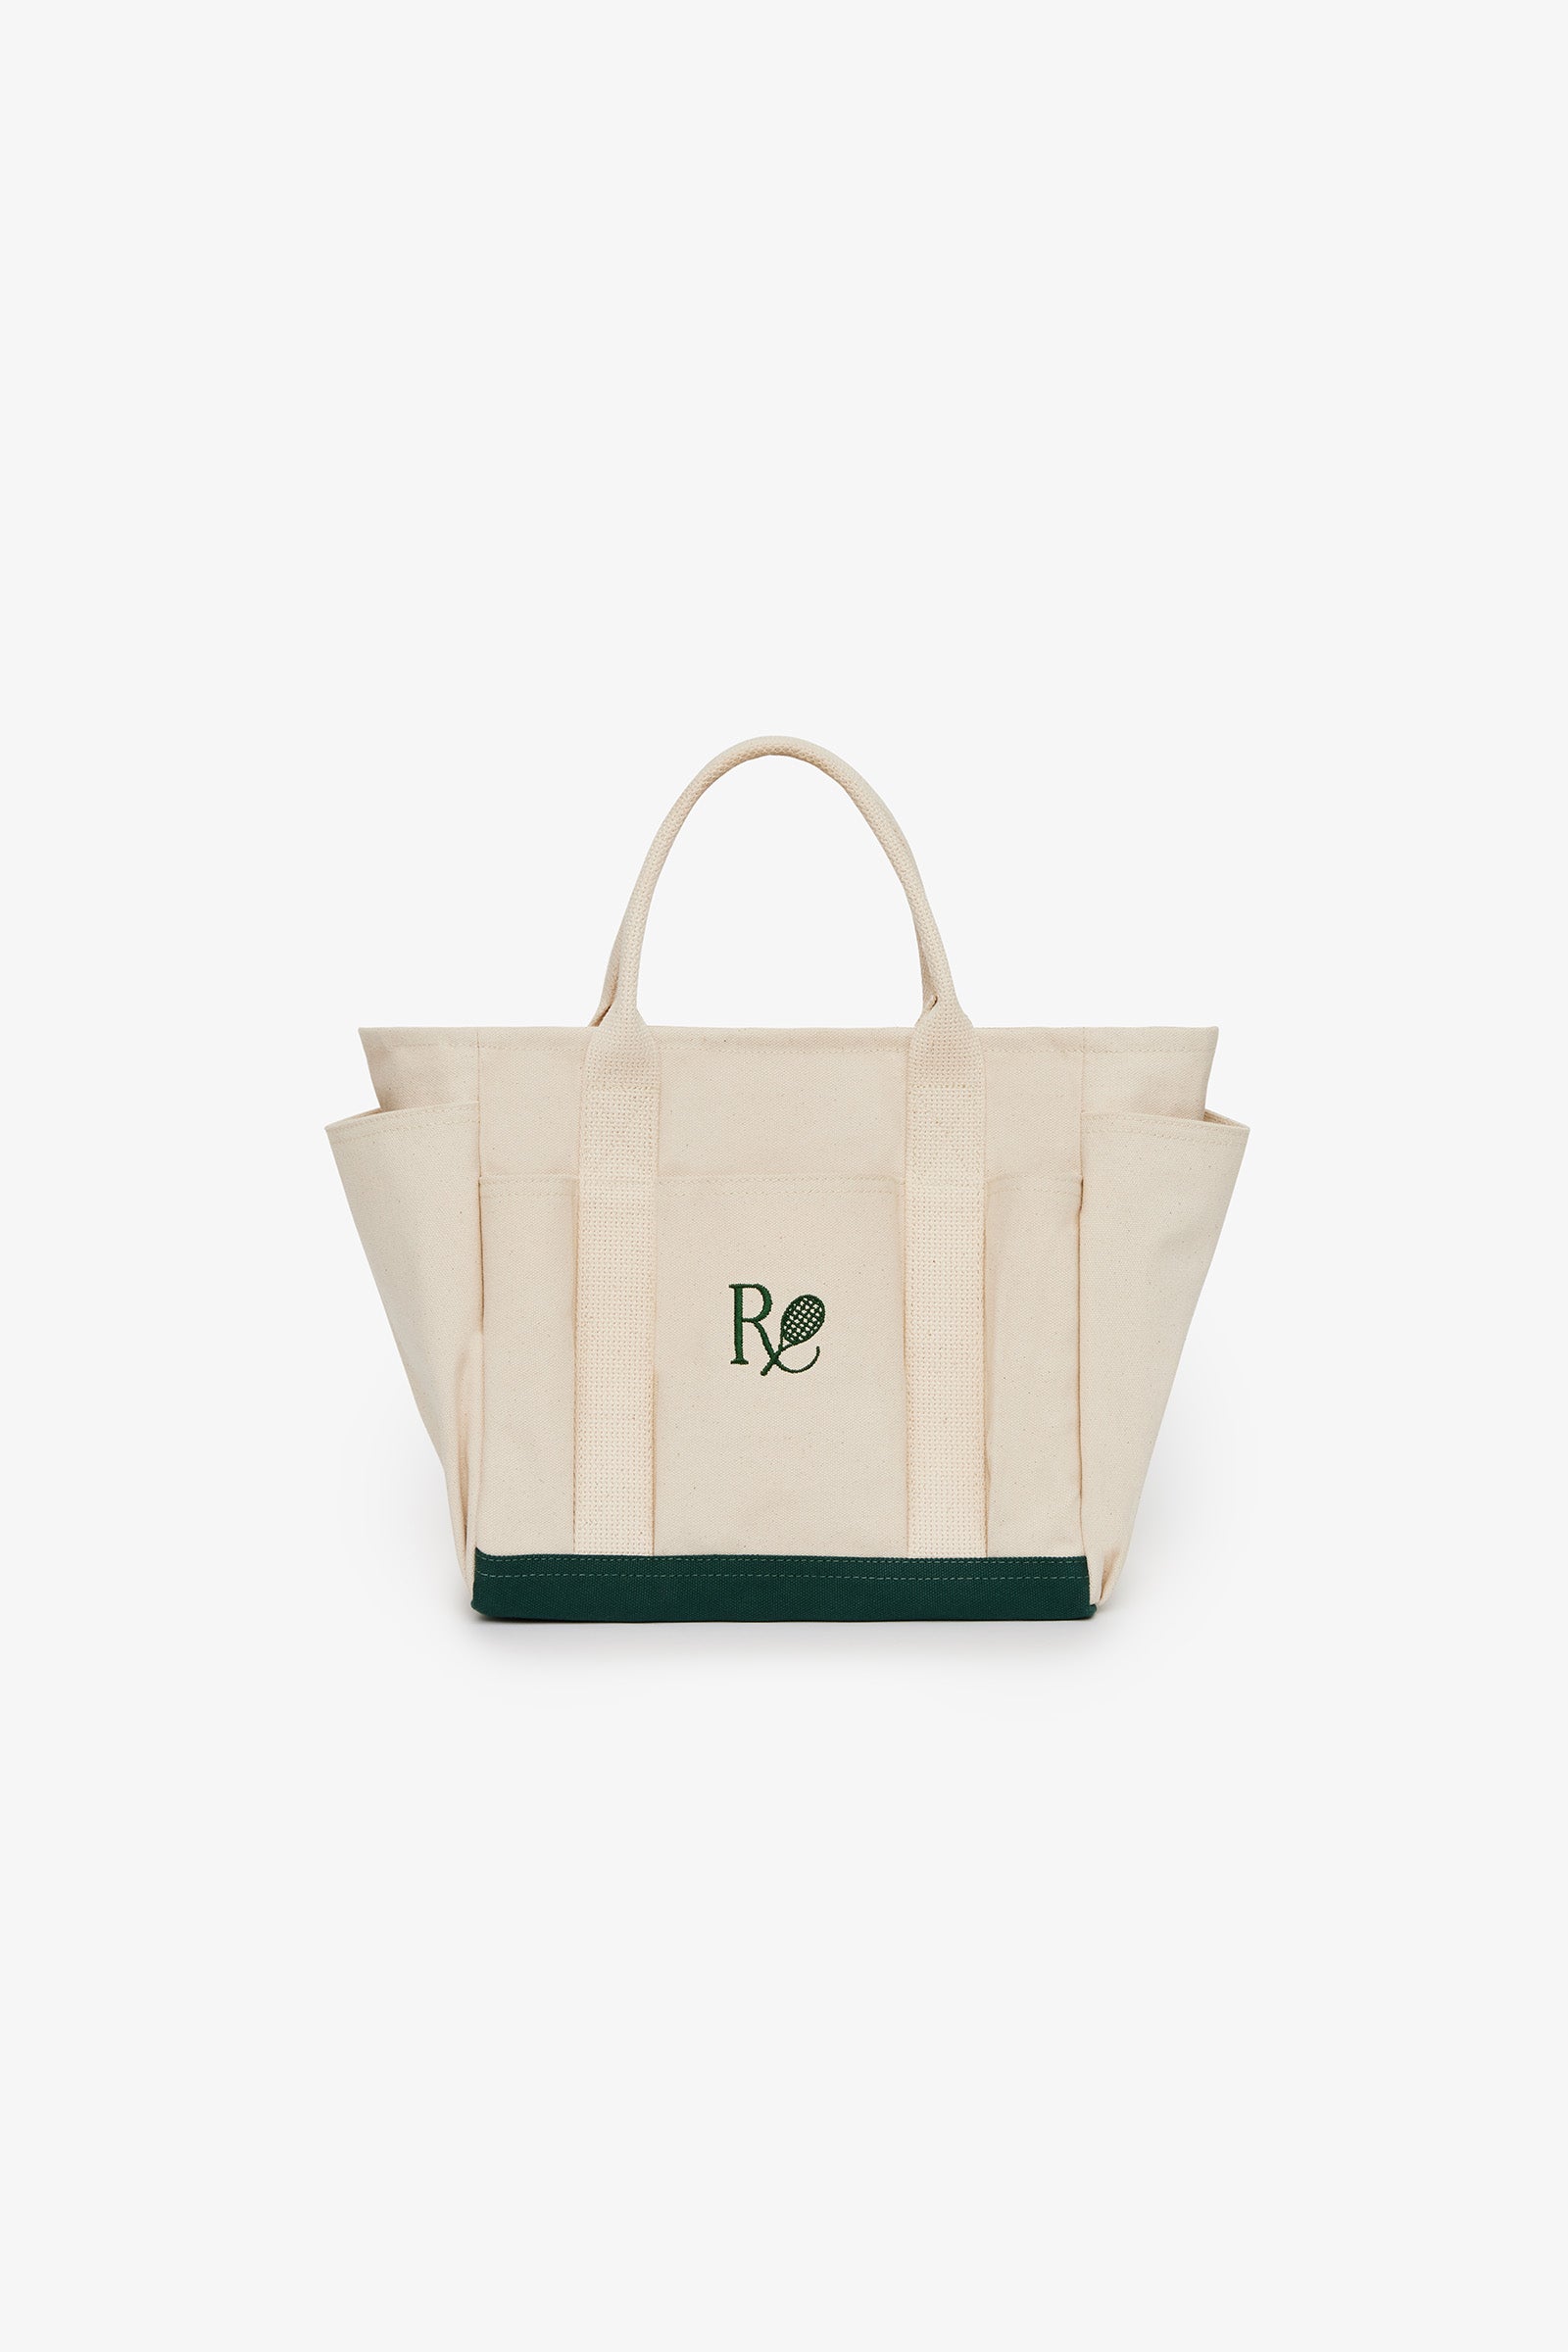 Garden Tote Bag /  Natural & Dark Green